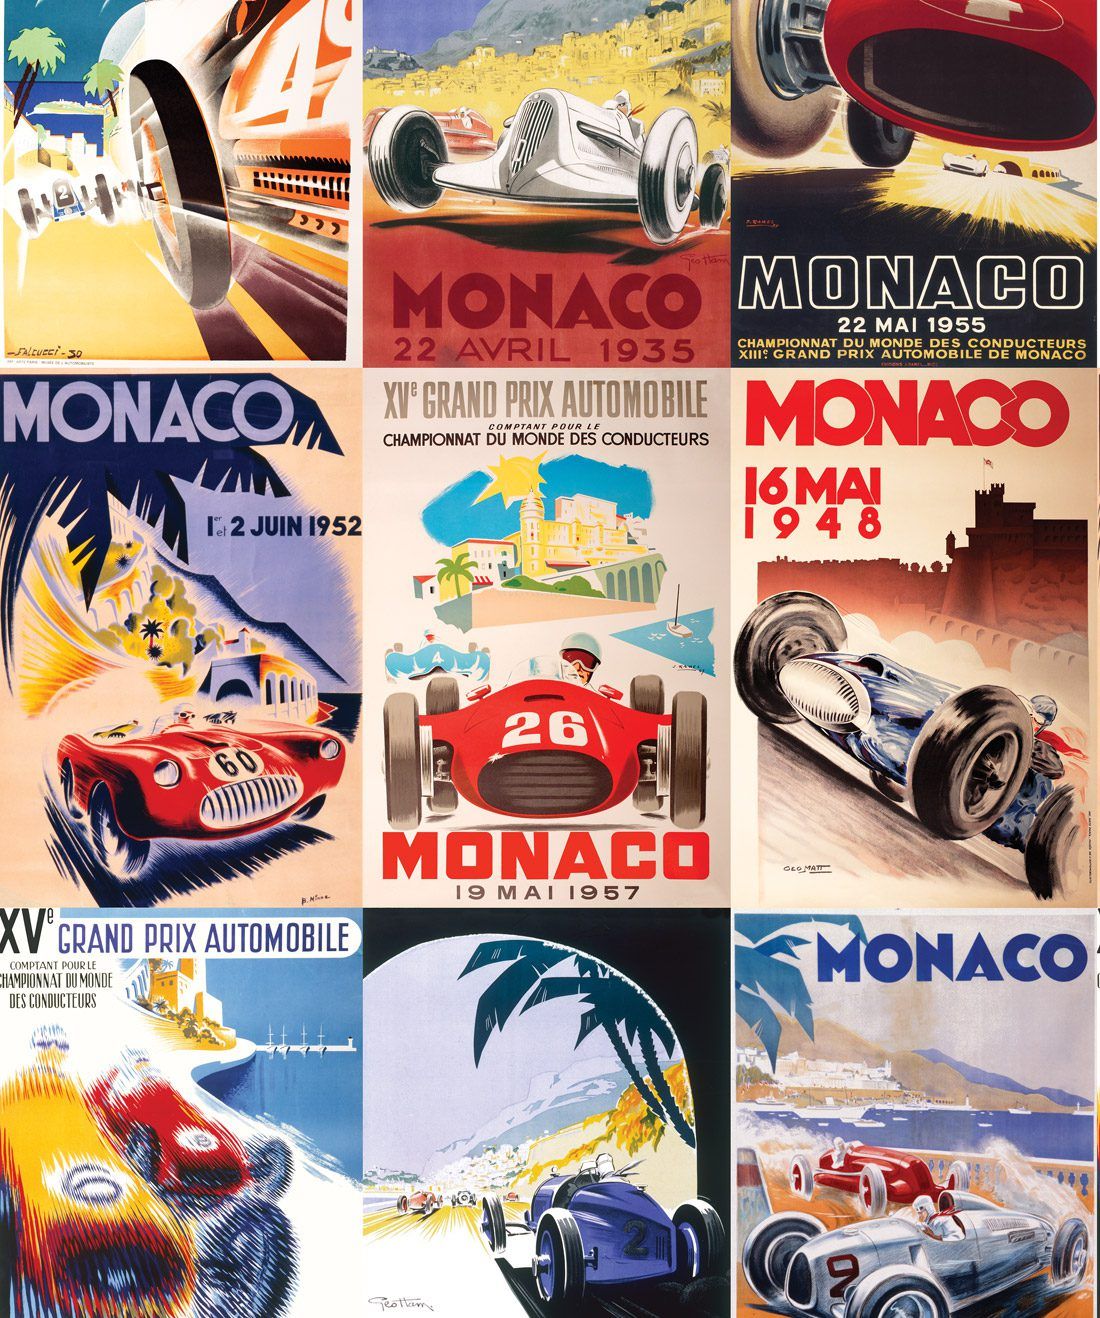 Circuit de Monoco is a vintage care themed wallpaper